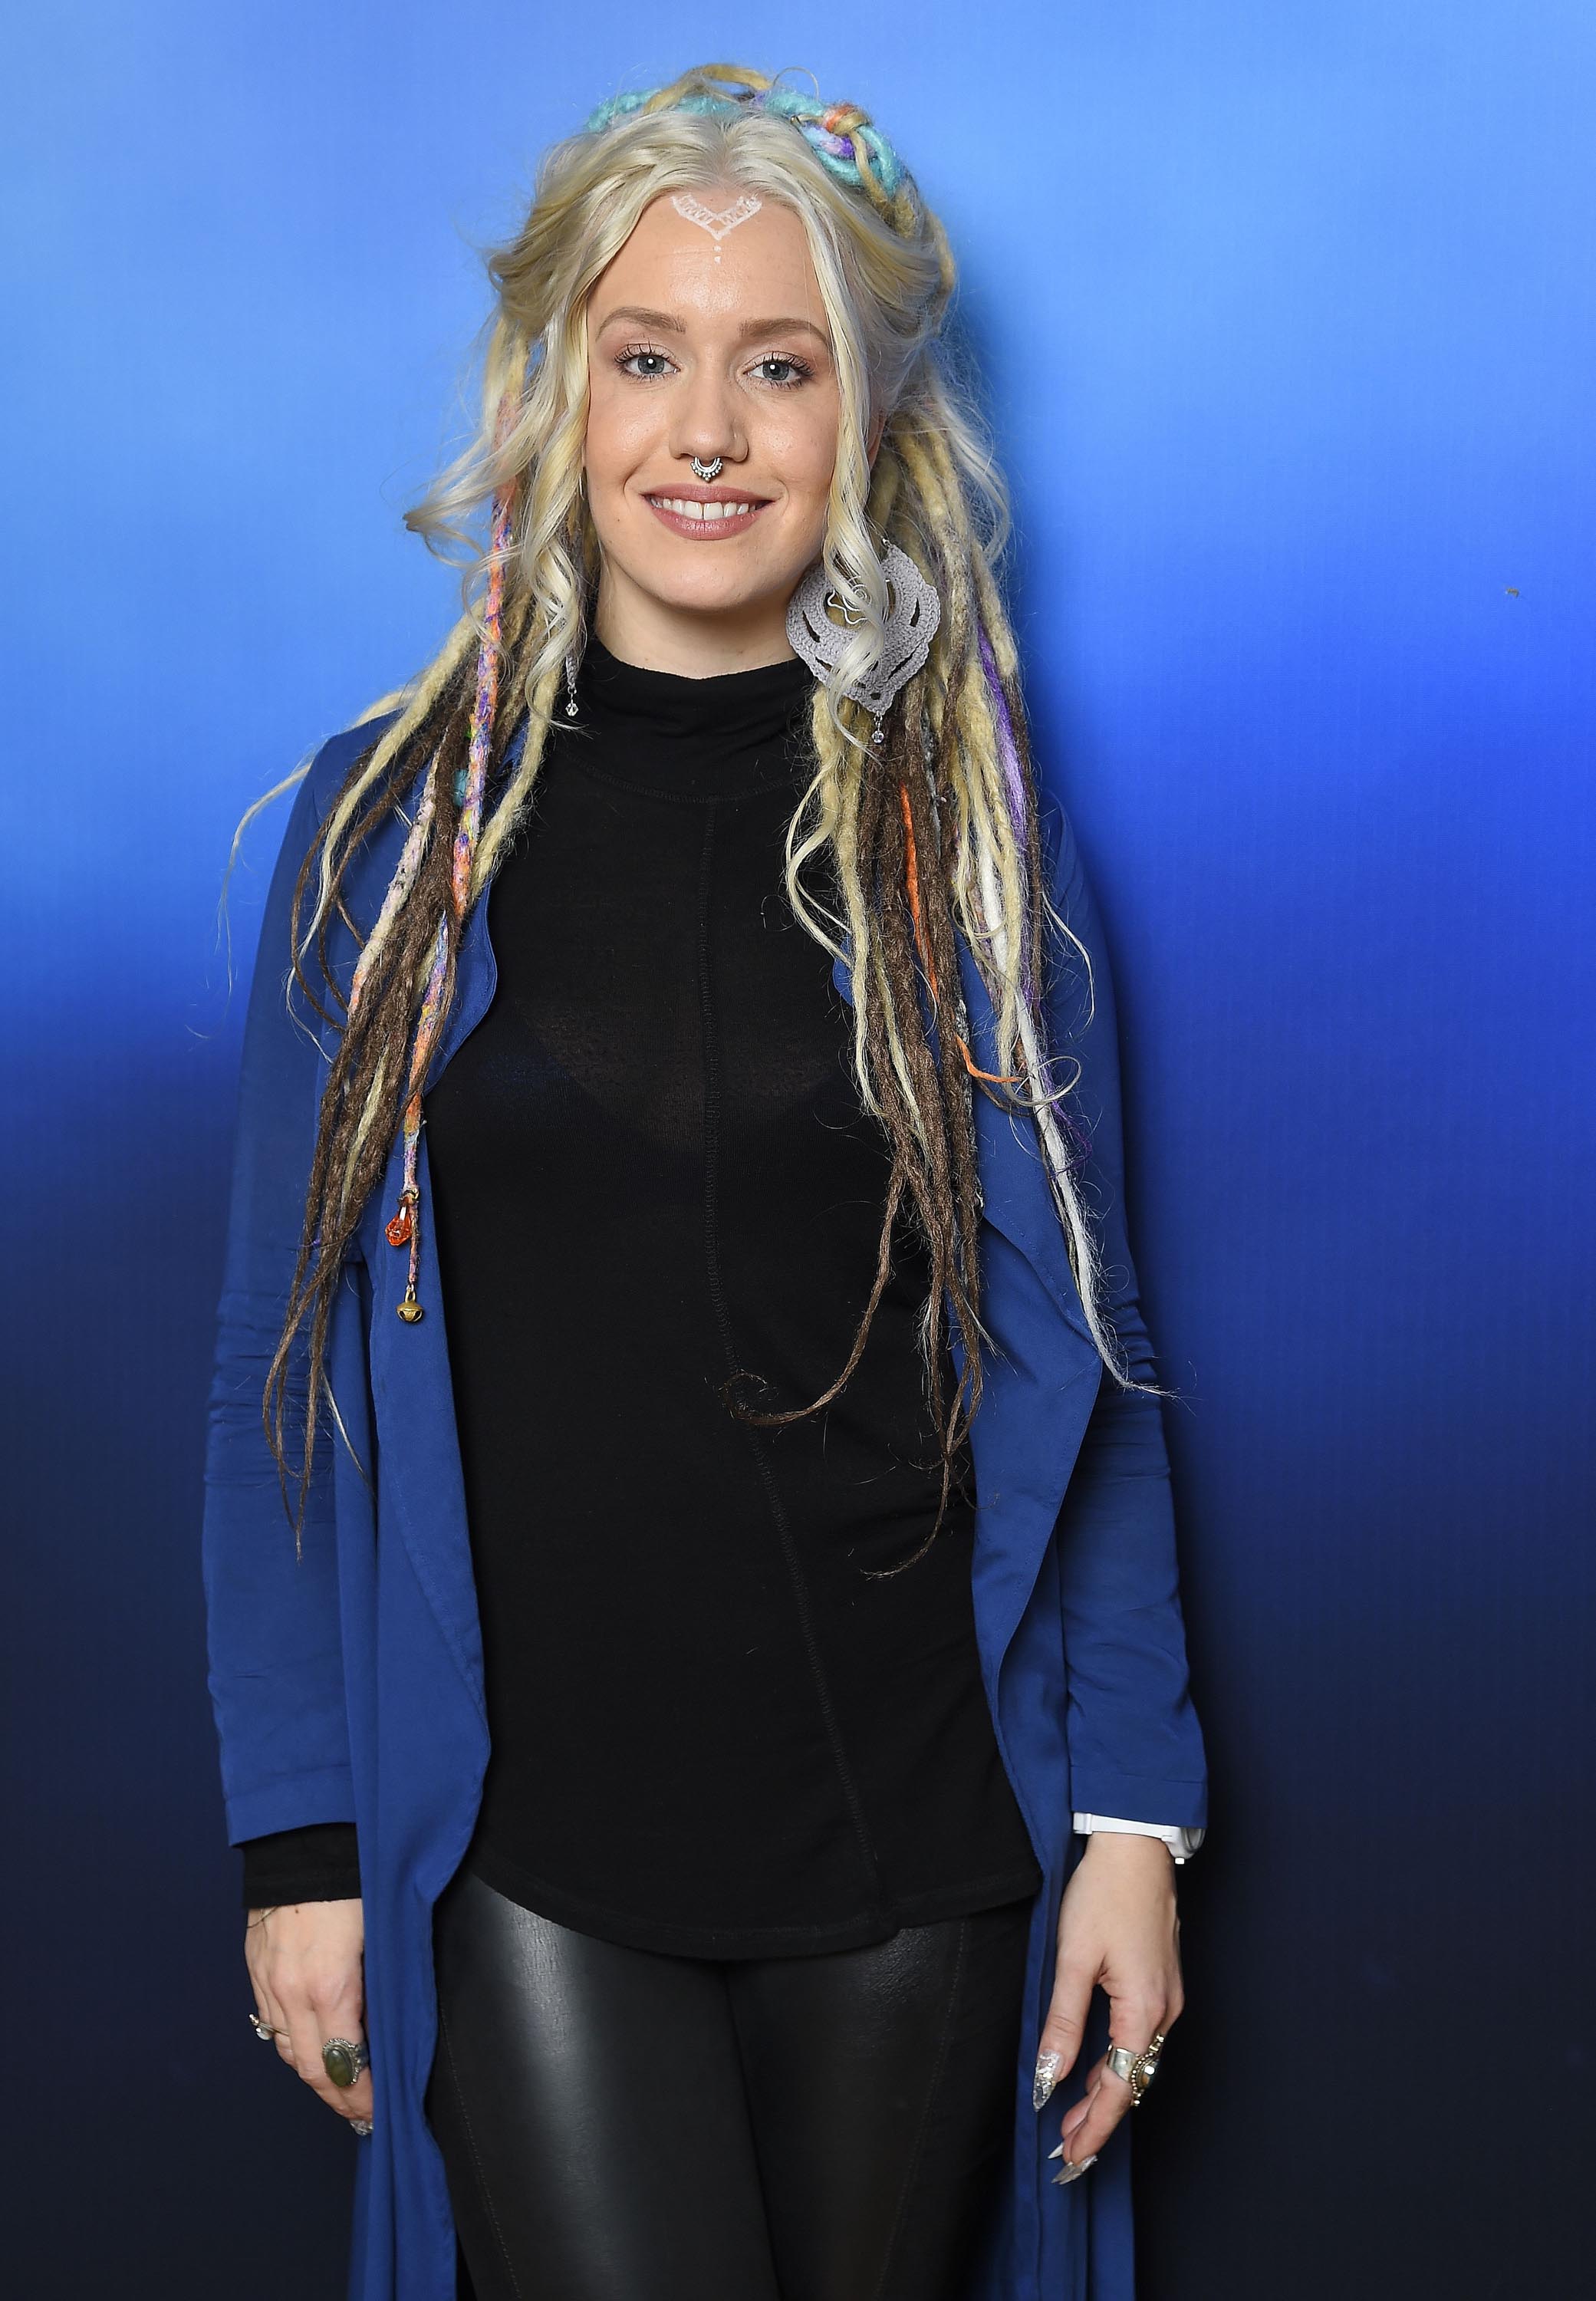 Aninia attends Melodifestivalen